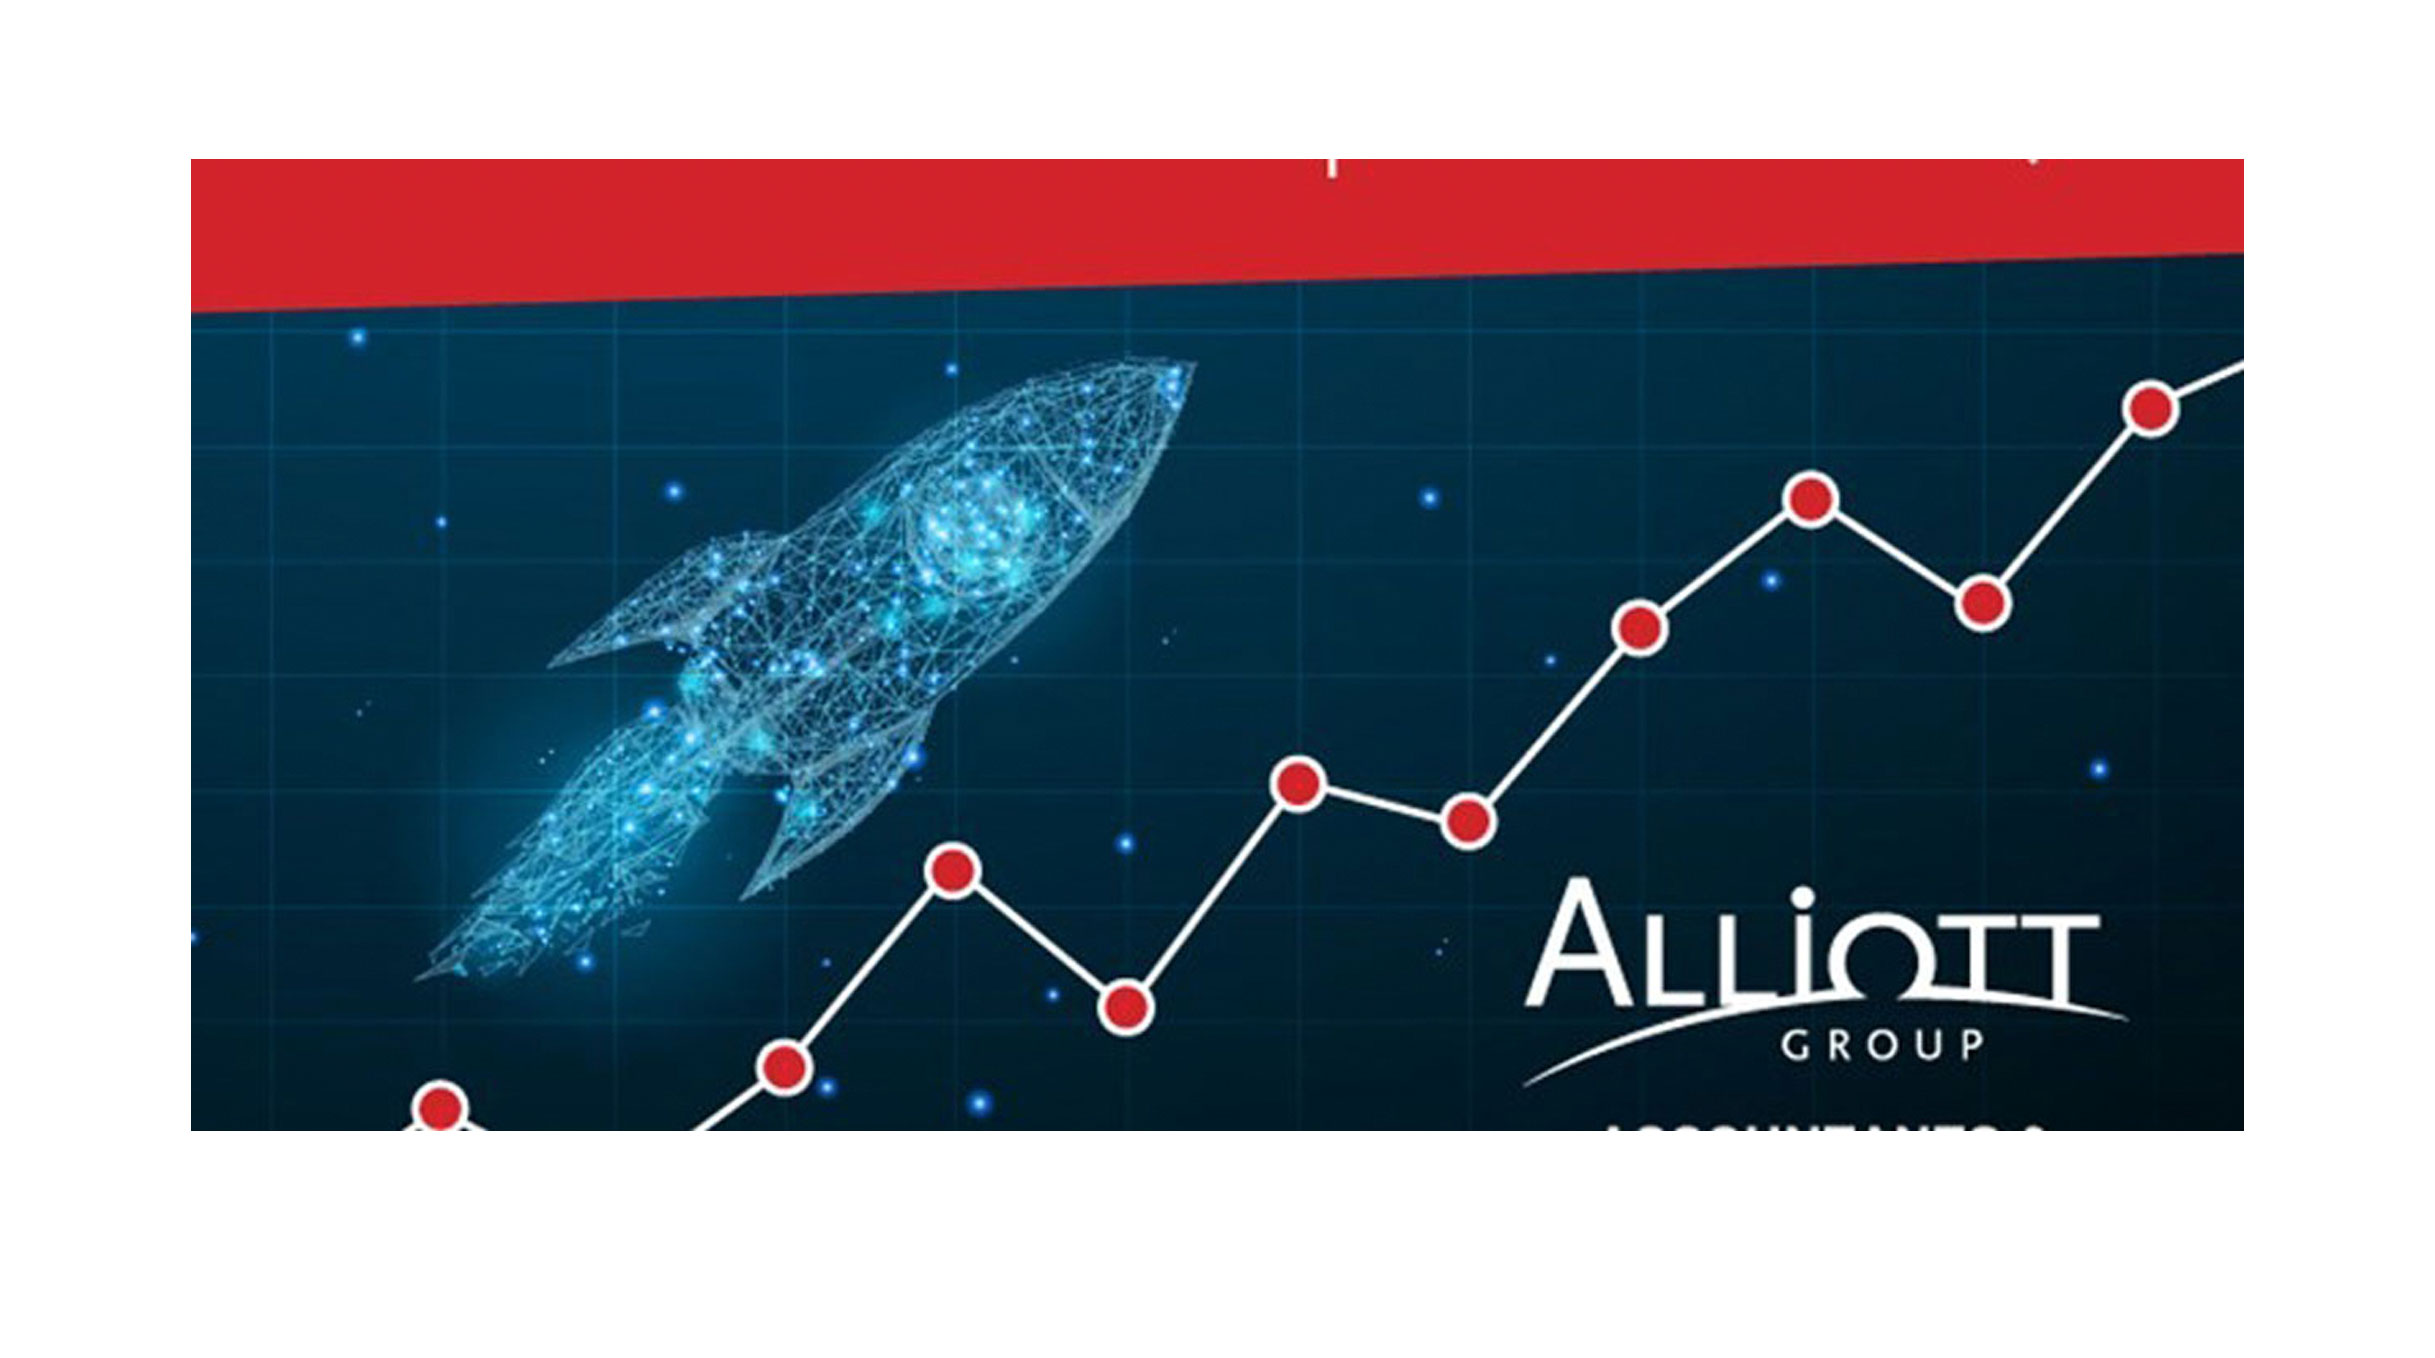 Alliott Group: Ρεκόρ ανάπτυξης σε νομικές και λογιστικές υπηρεσίες την εποχή του Covid-19